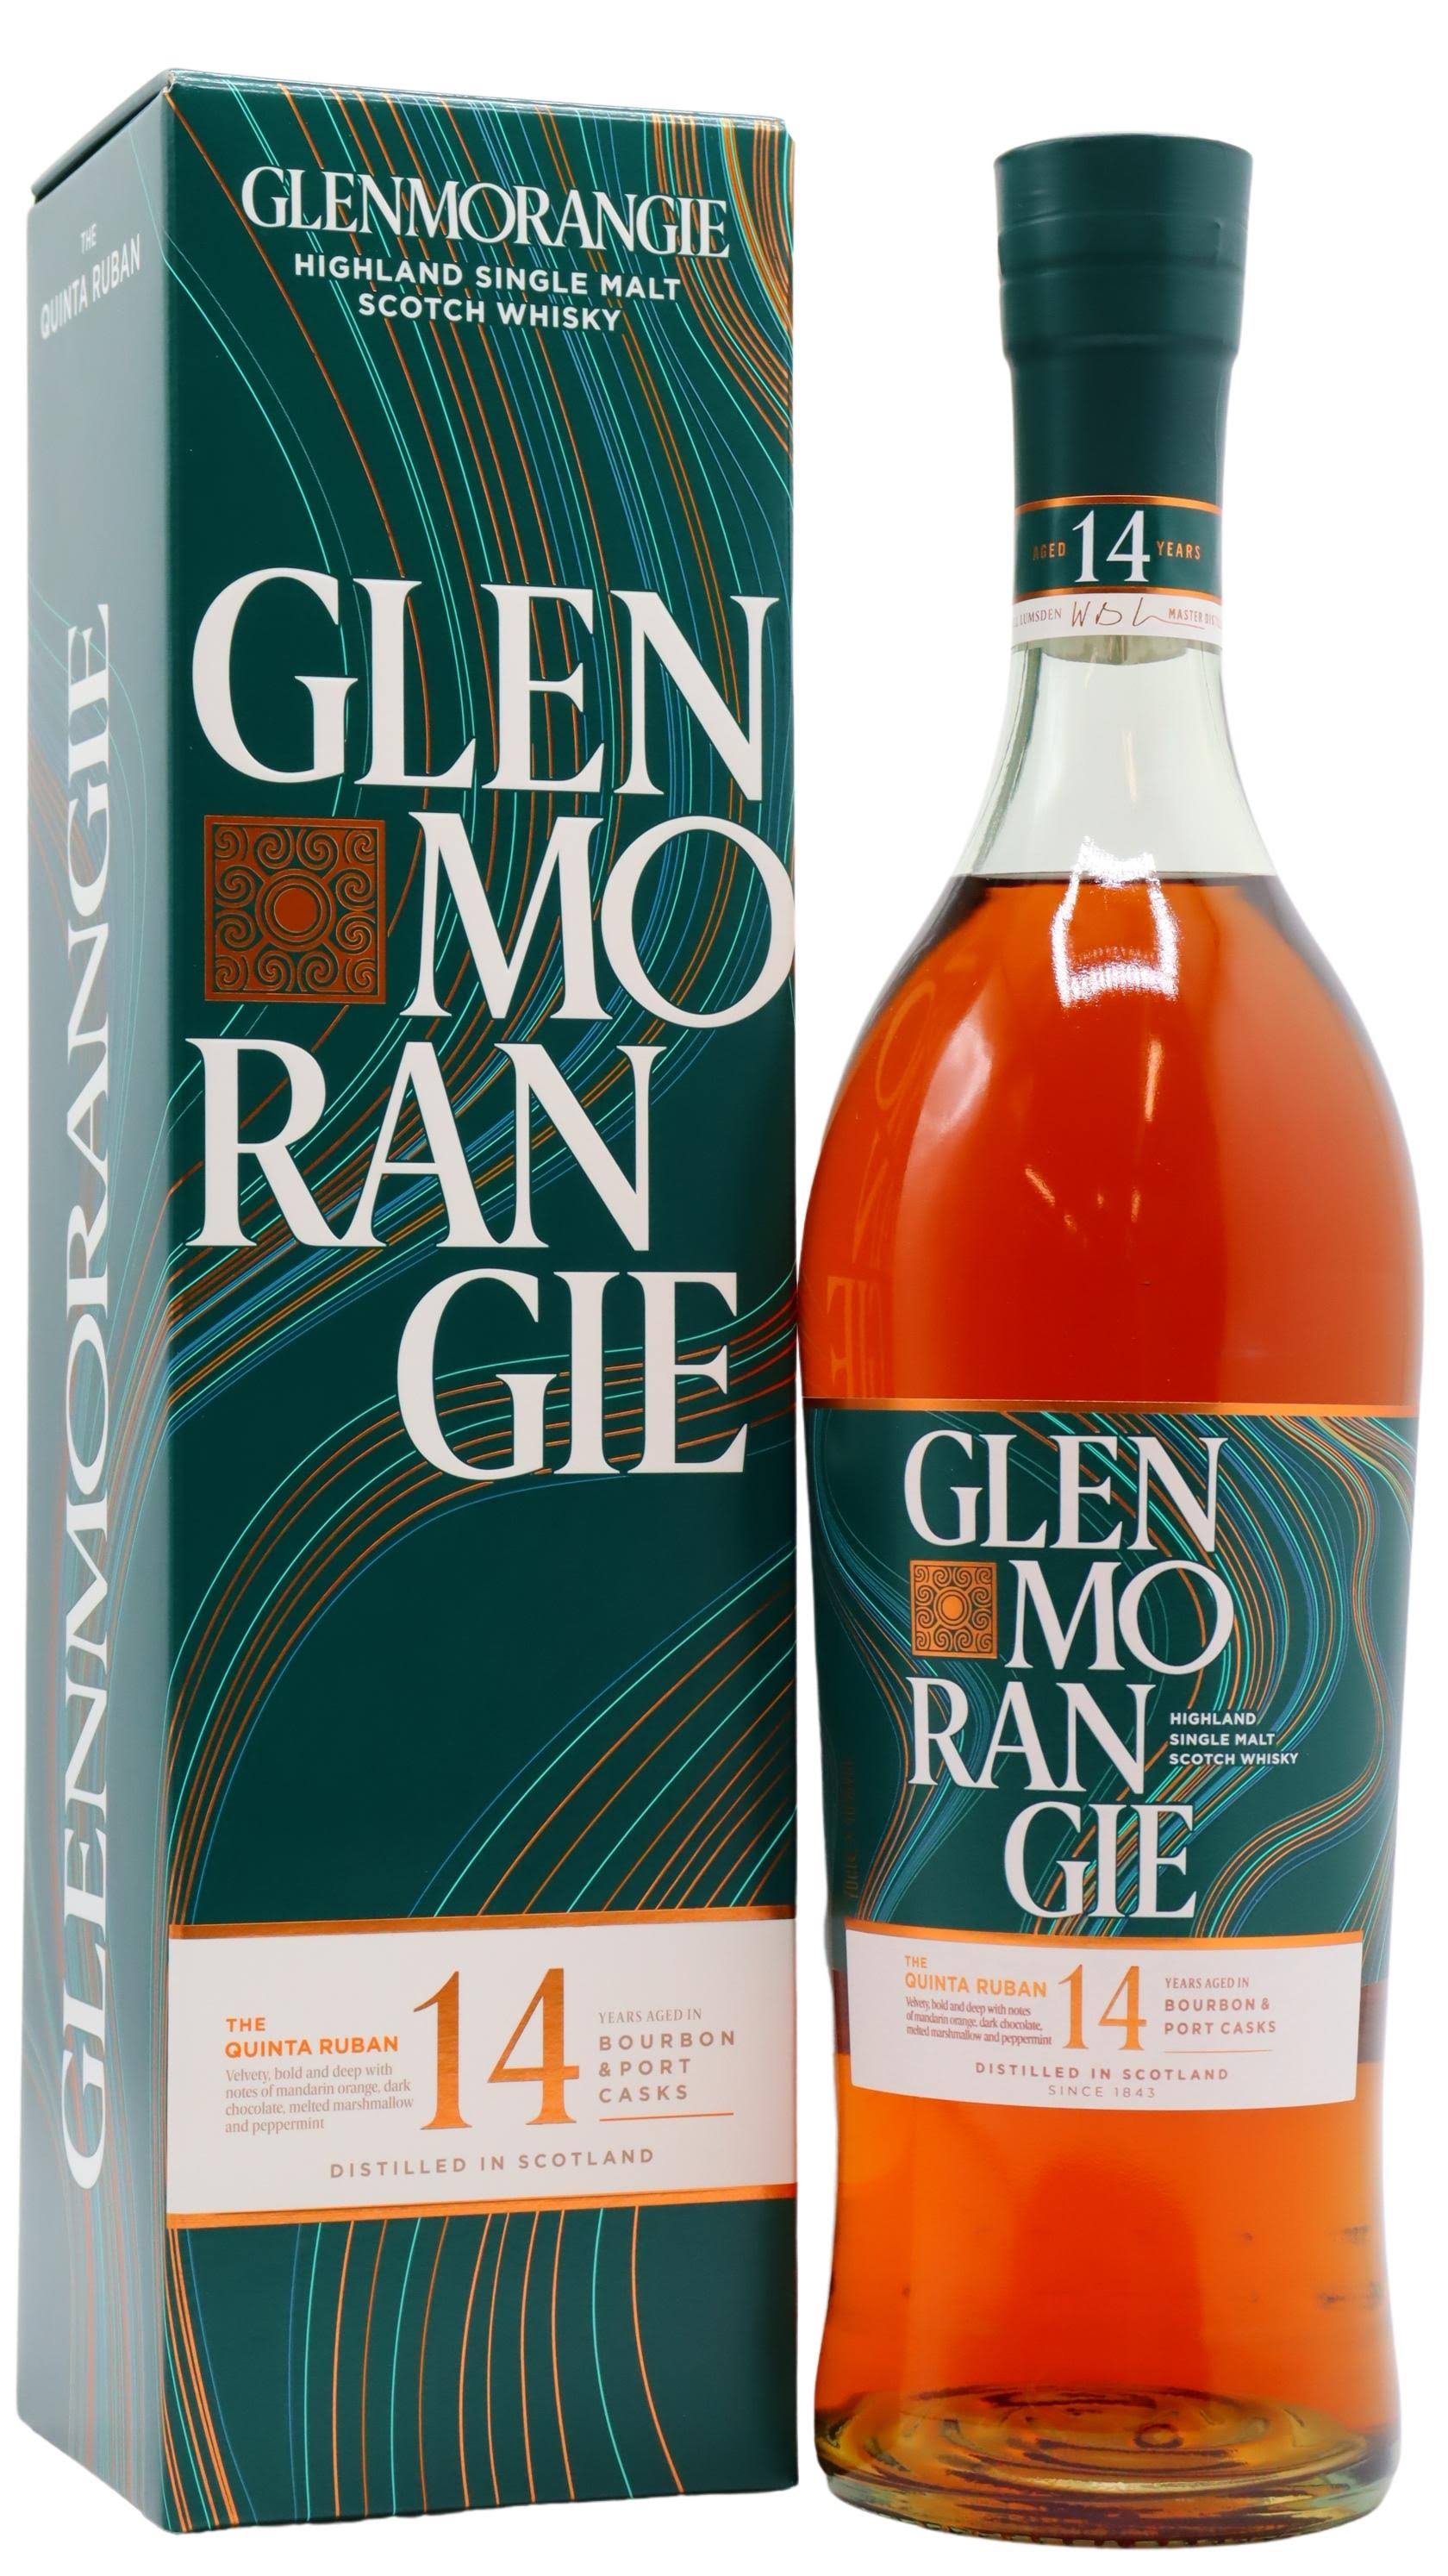 Glenmorangie The Quinta Ruban Aged 14 Years Single Malt Scotch Whisky - 70cl